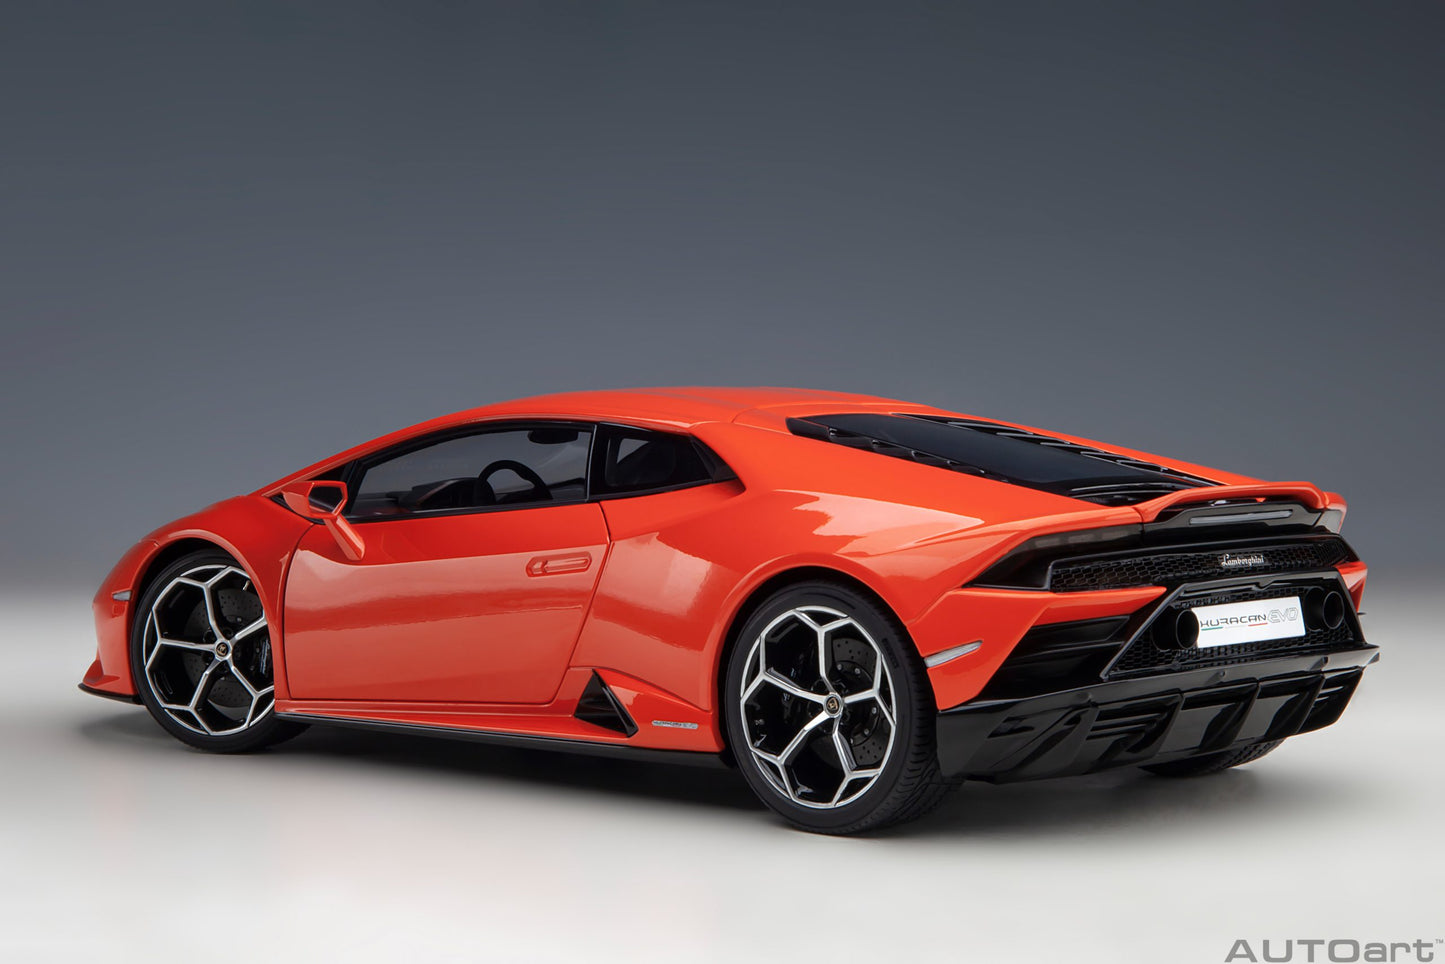 AUTOart 1:18 Lamborghini Huracan Evo (Arancio Xanto) 79214